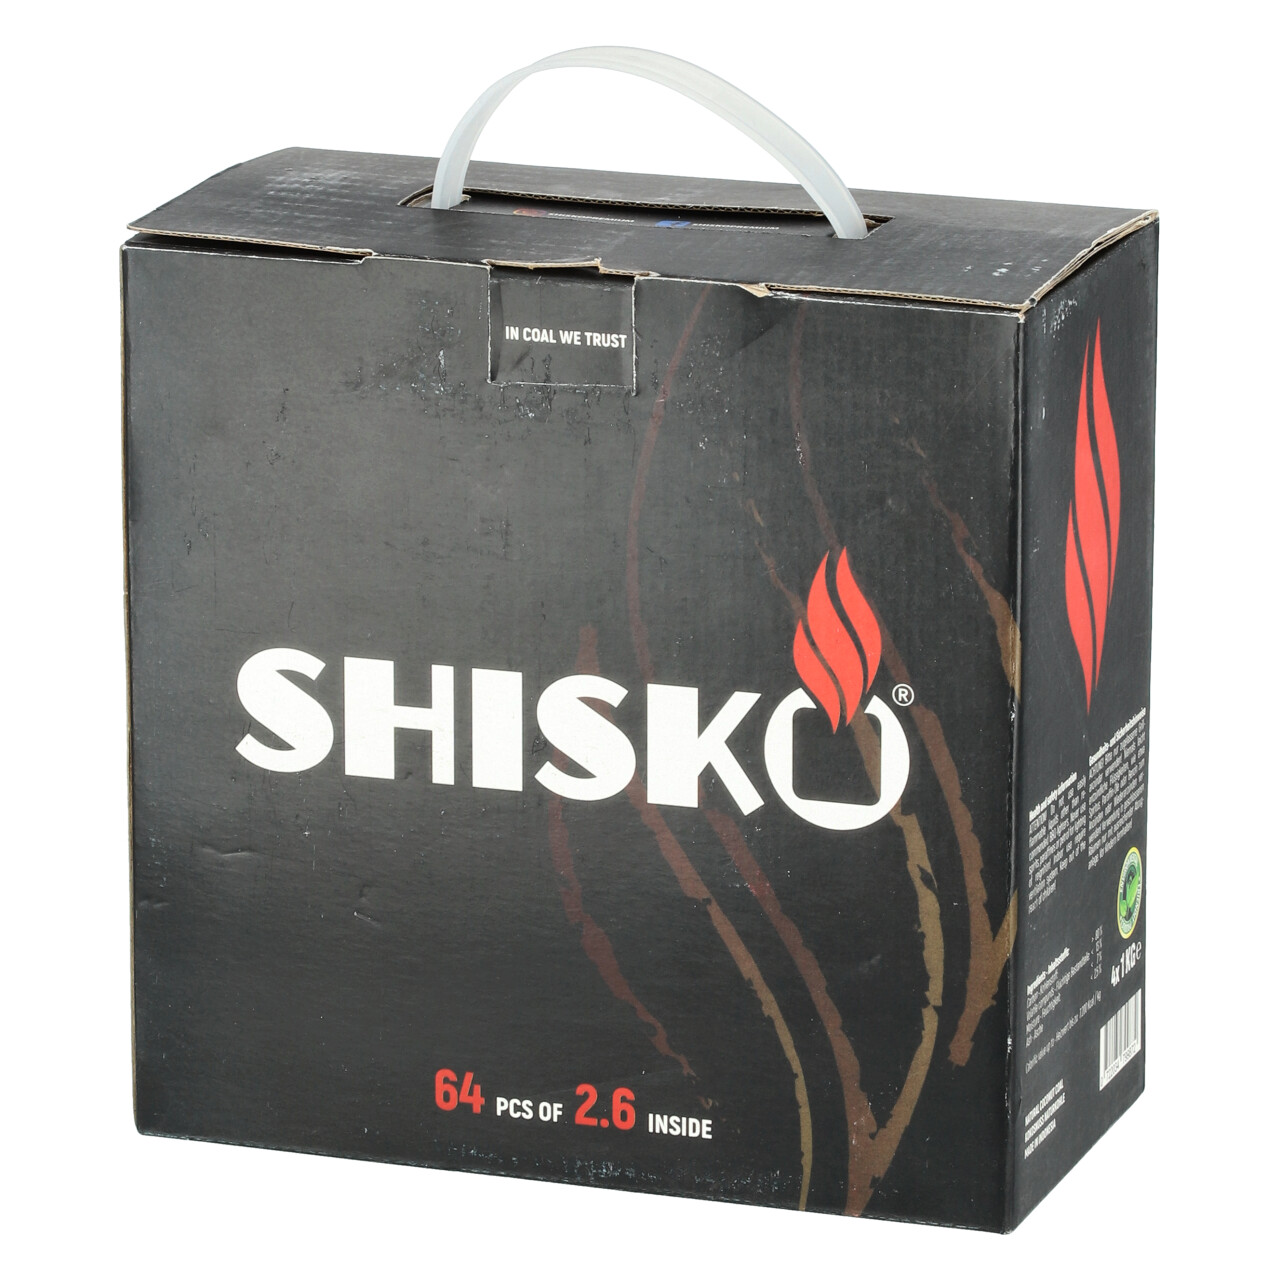 Shisko Premium Kokoskohle, 4 kg